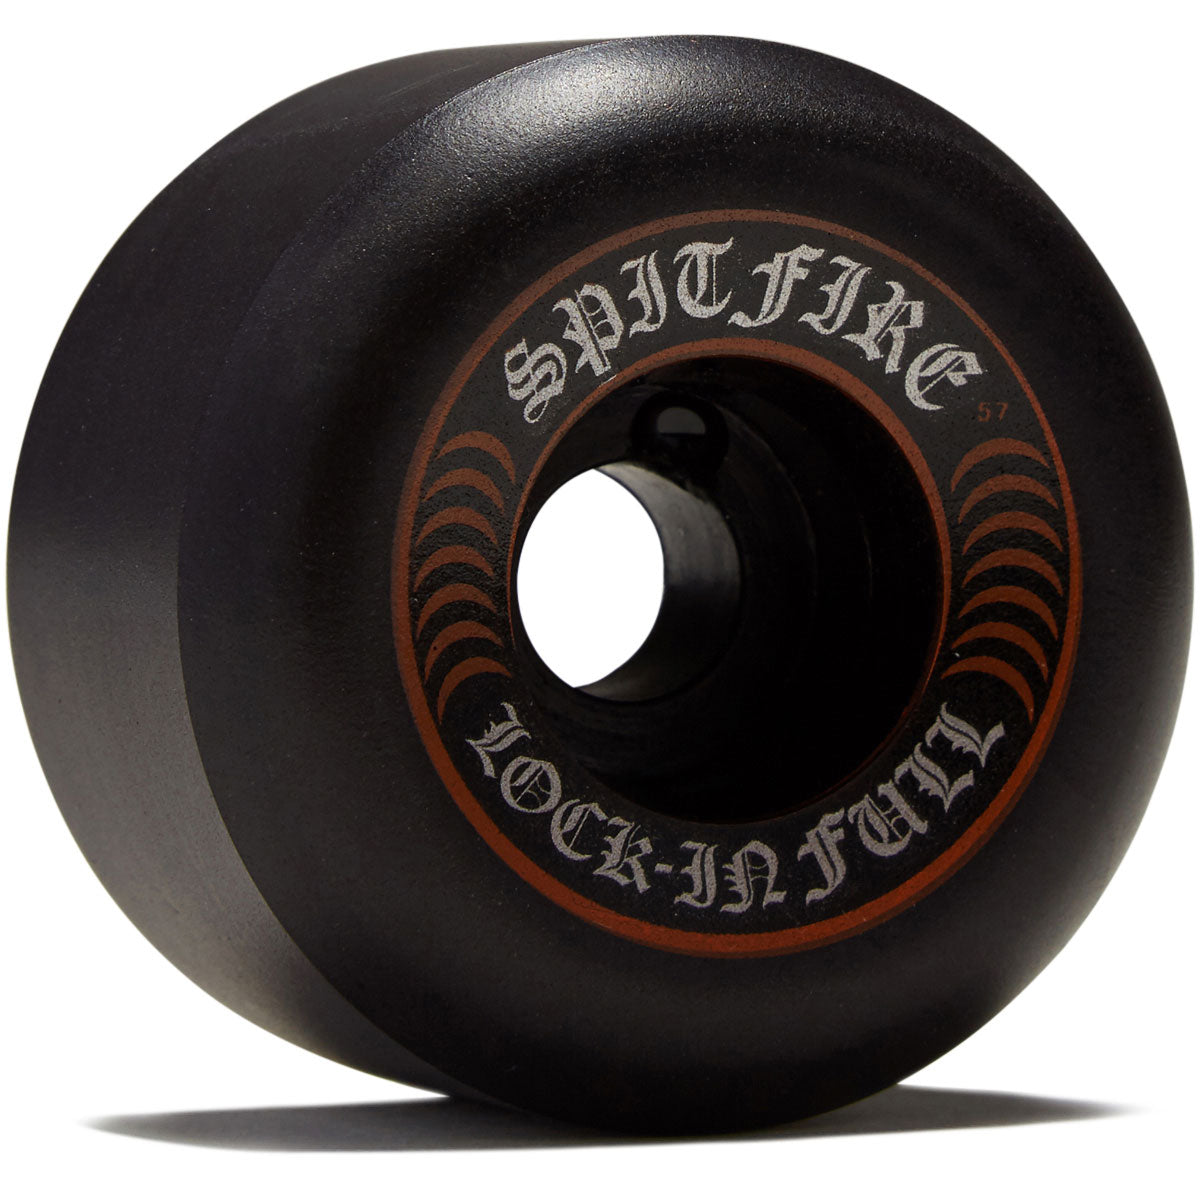 Spitfire F4 99 Lock-In Full Skateboard Wheels - Black - 57mm image 1